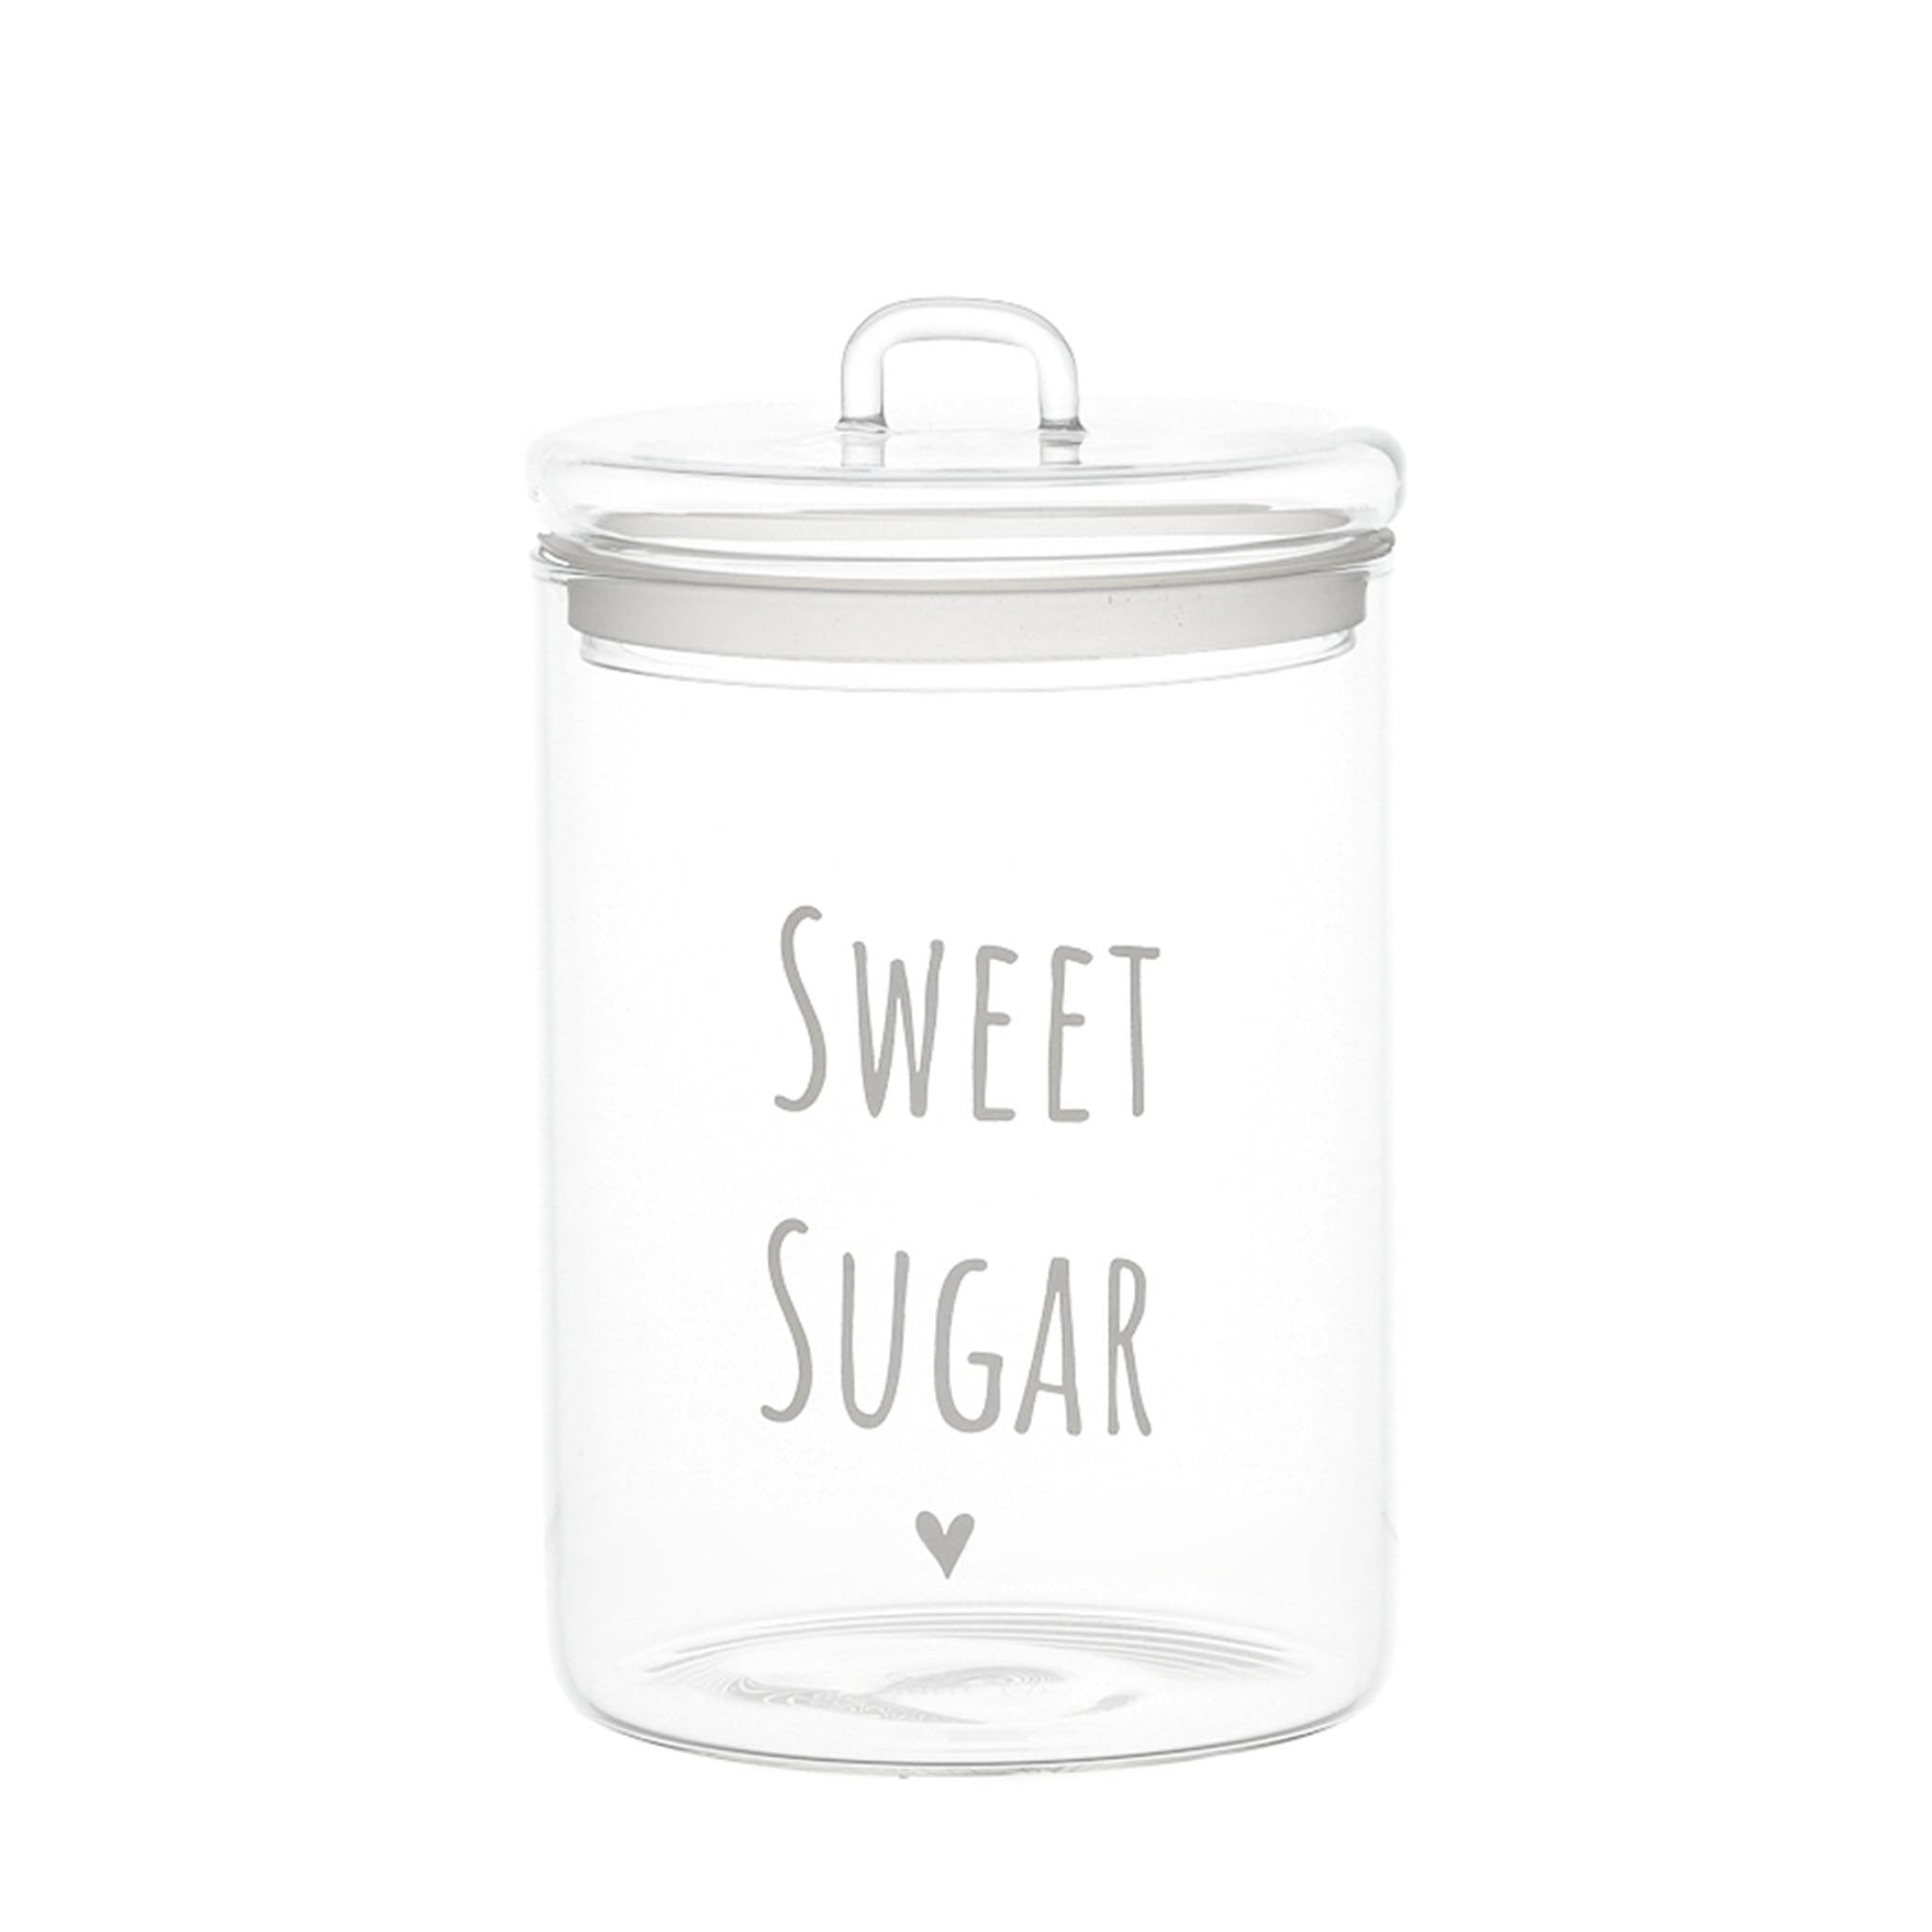 Sweet Sugar jar